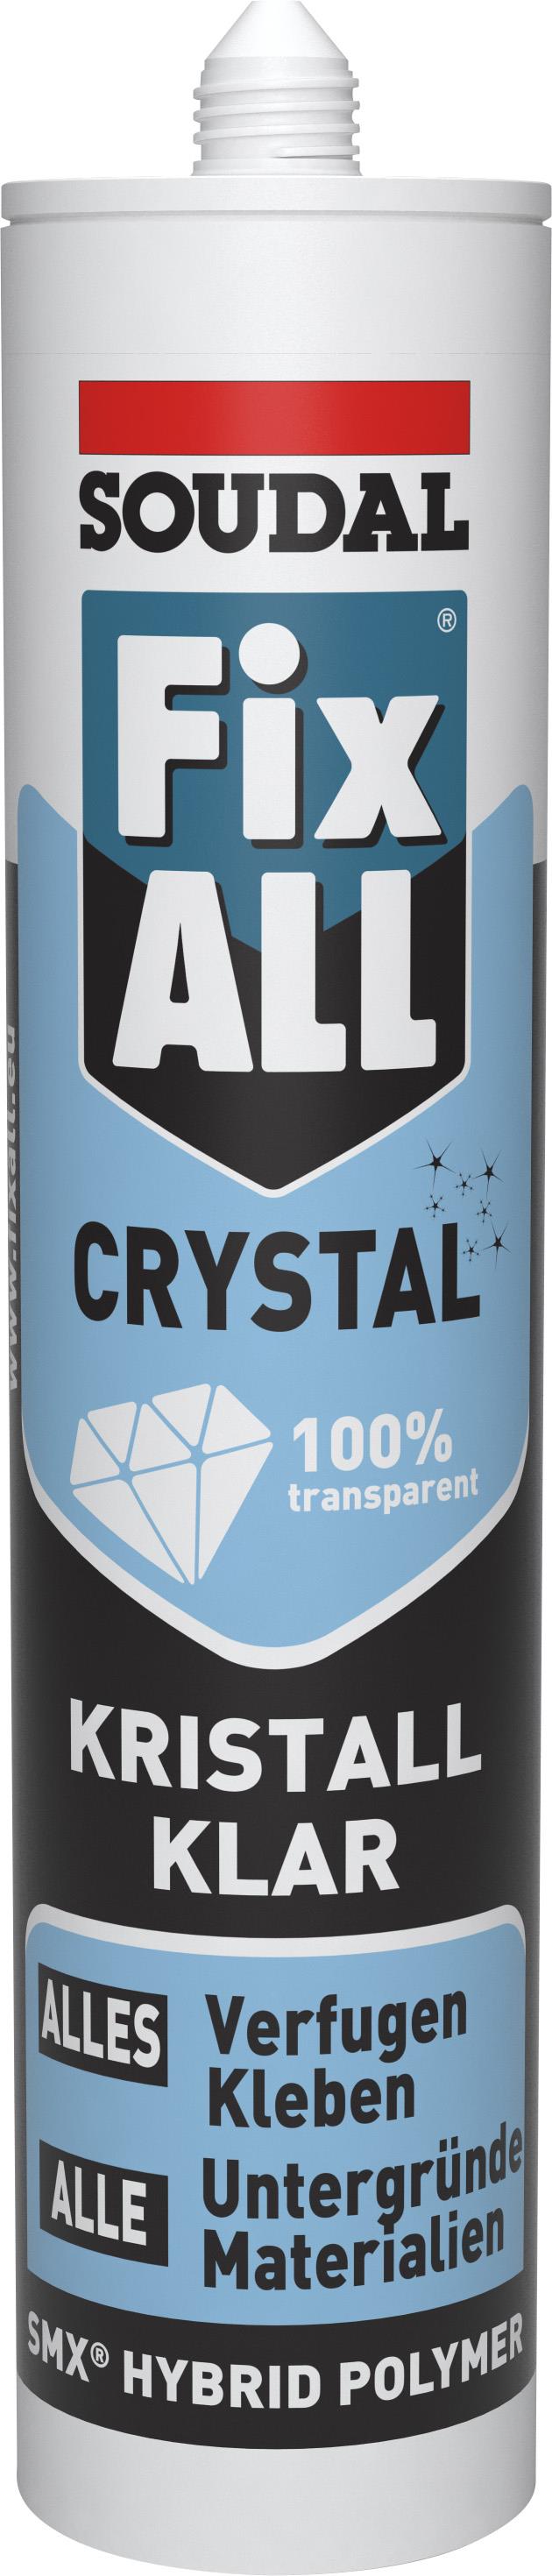 Soudal Fix All Crystal kristallklar